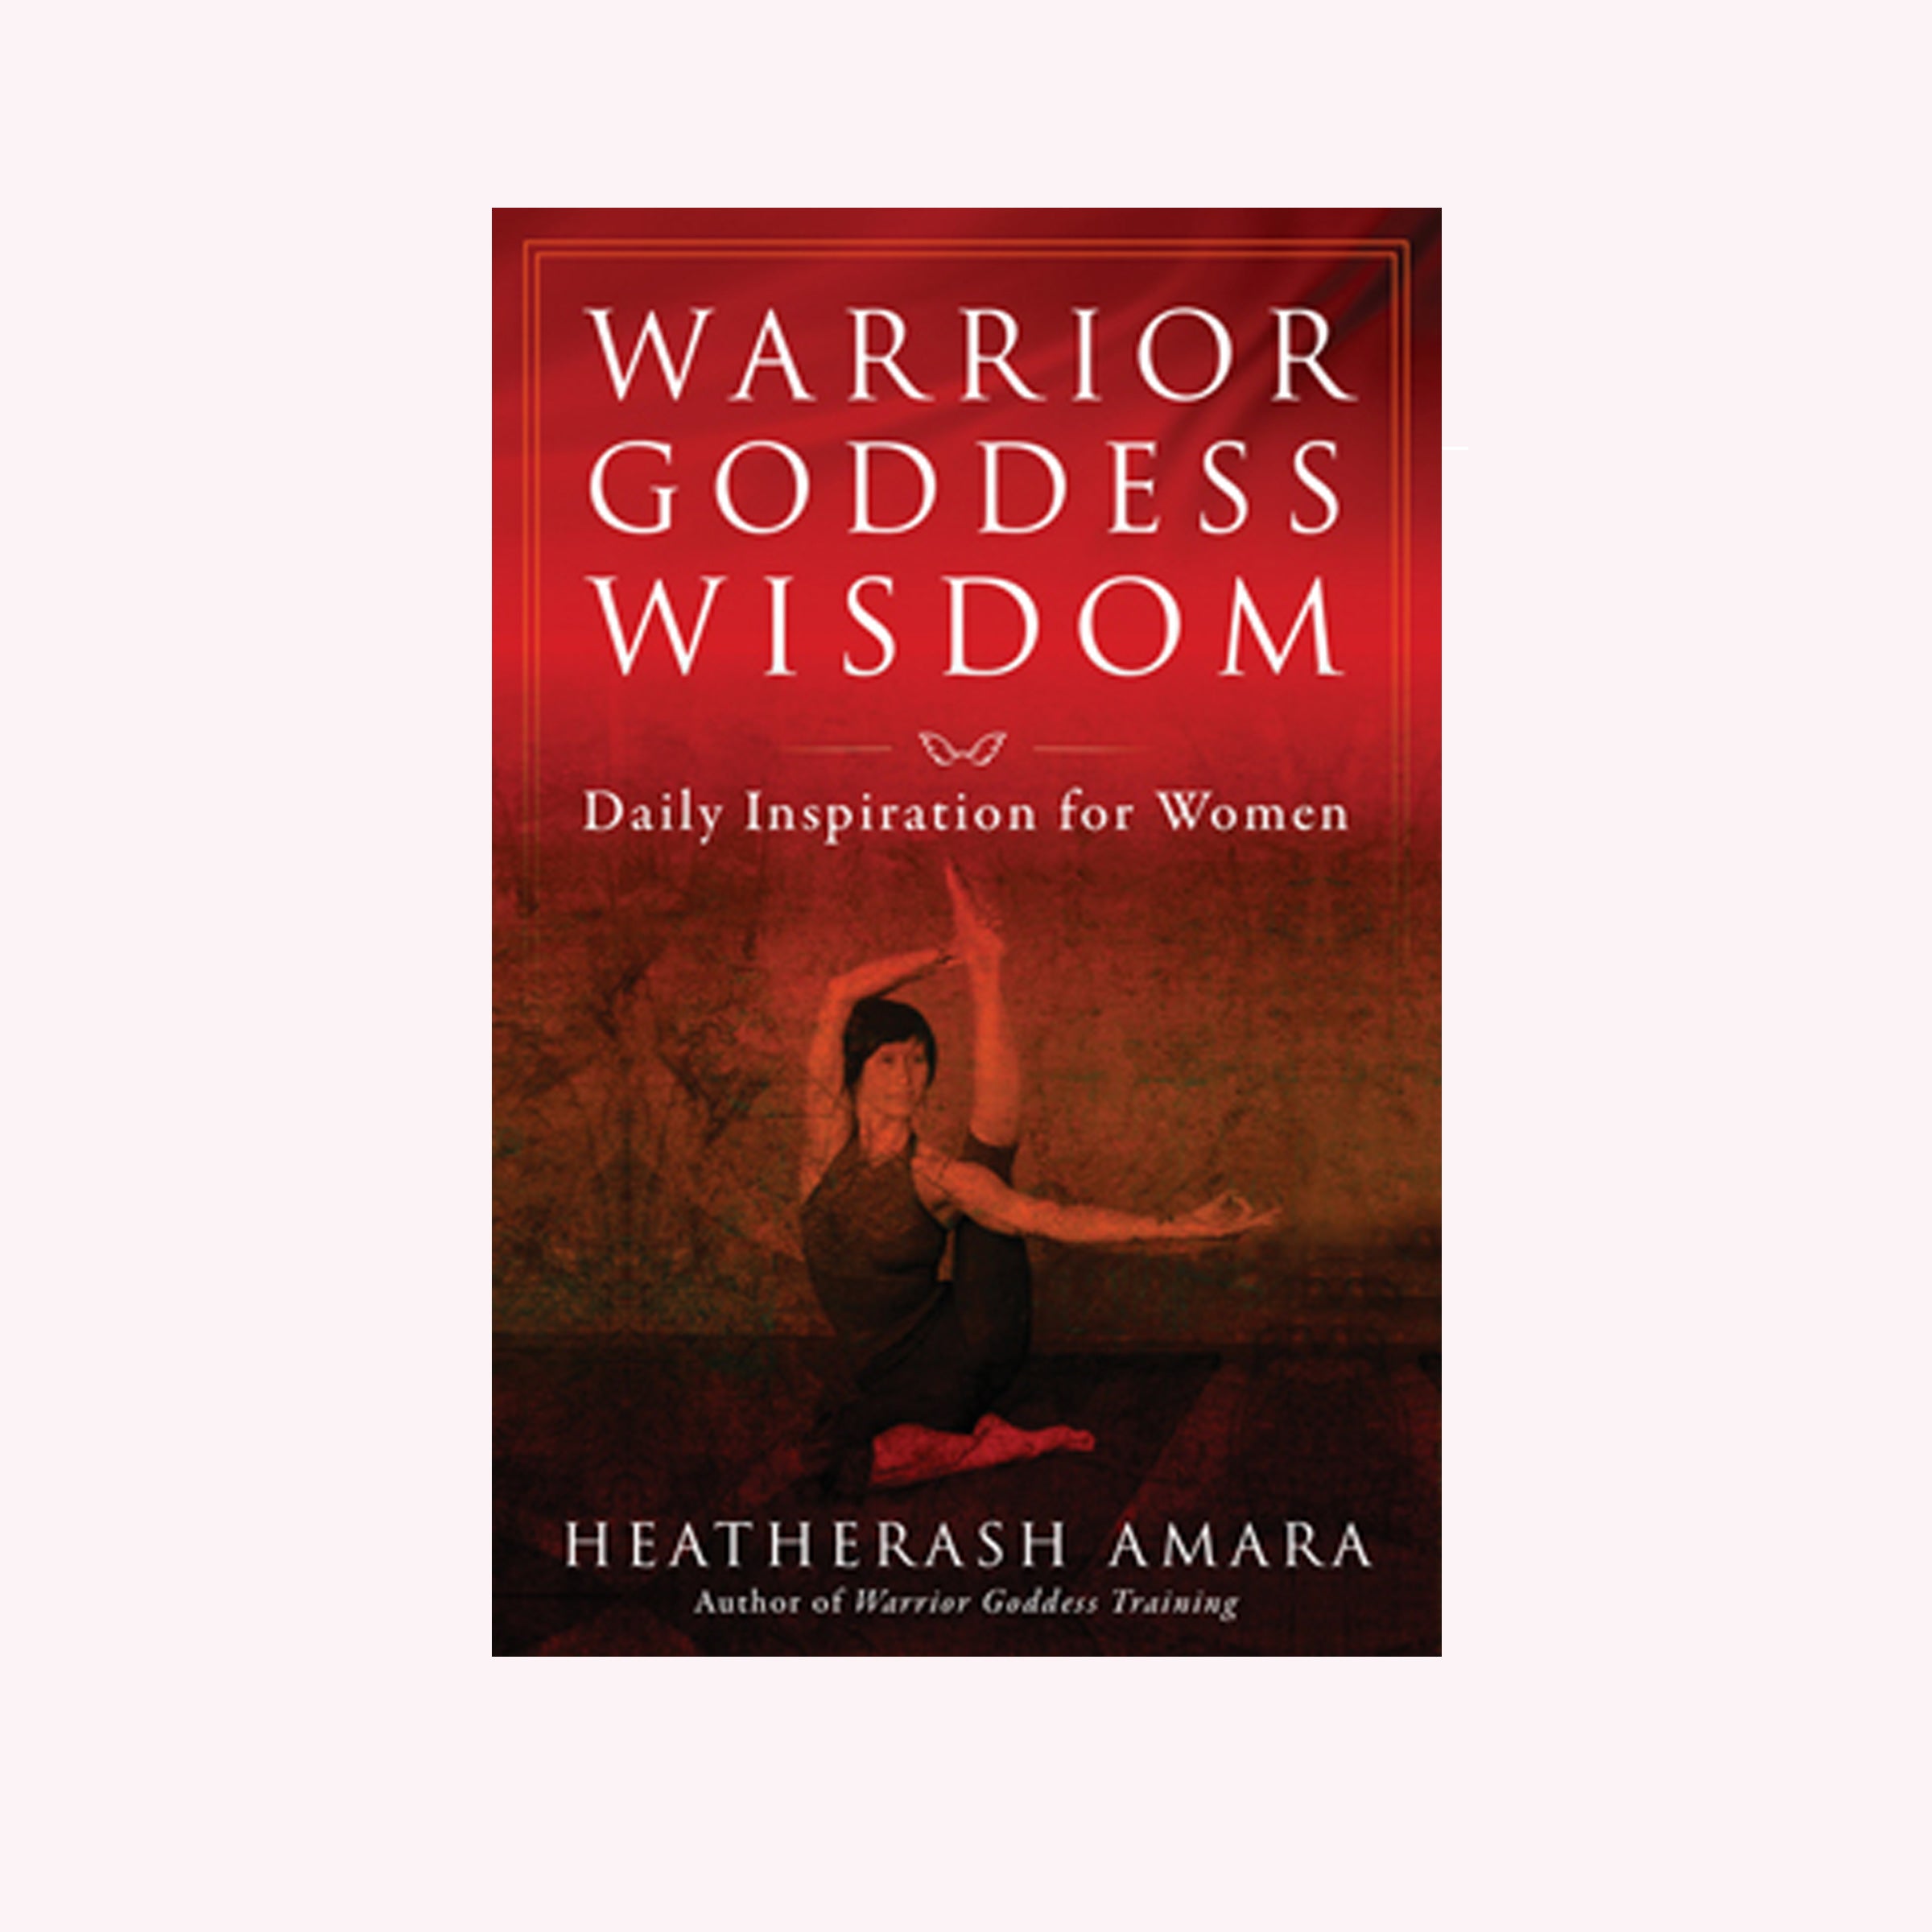 Warrior Goddess Wisdom